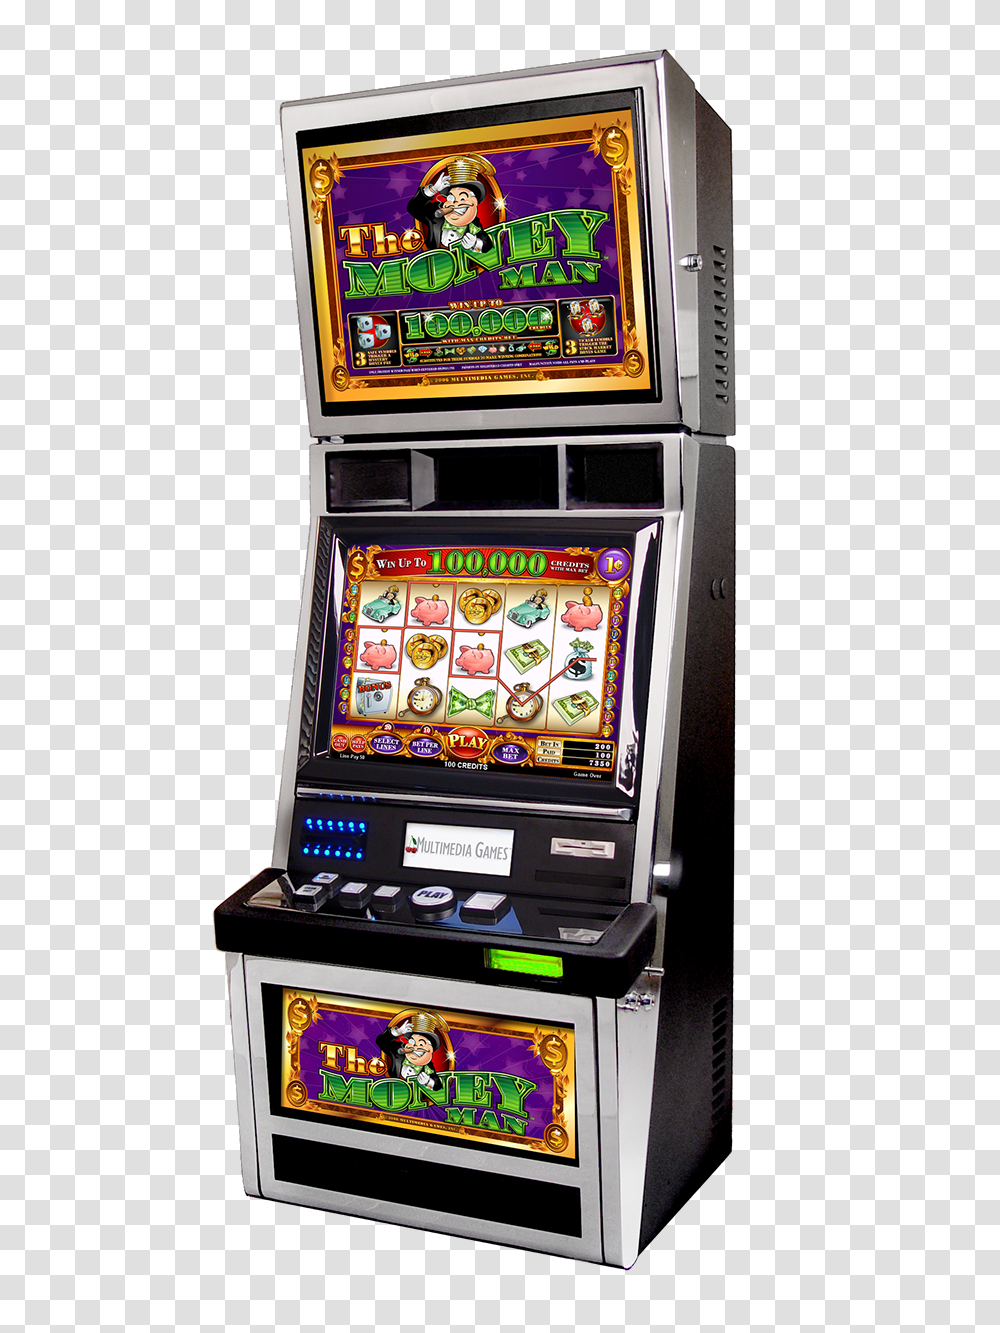 Slot Machine Glass Displays On Pratt Portfolios, Gambling, Game, Refrigerator, Appliance Transparent Png